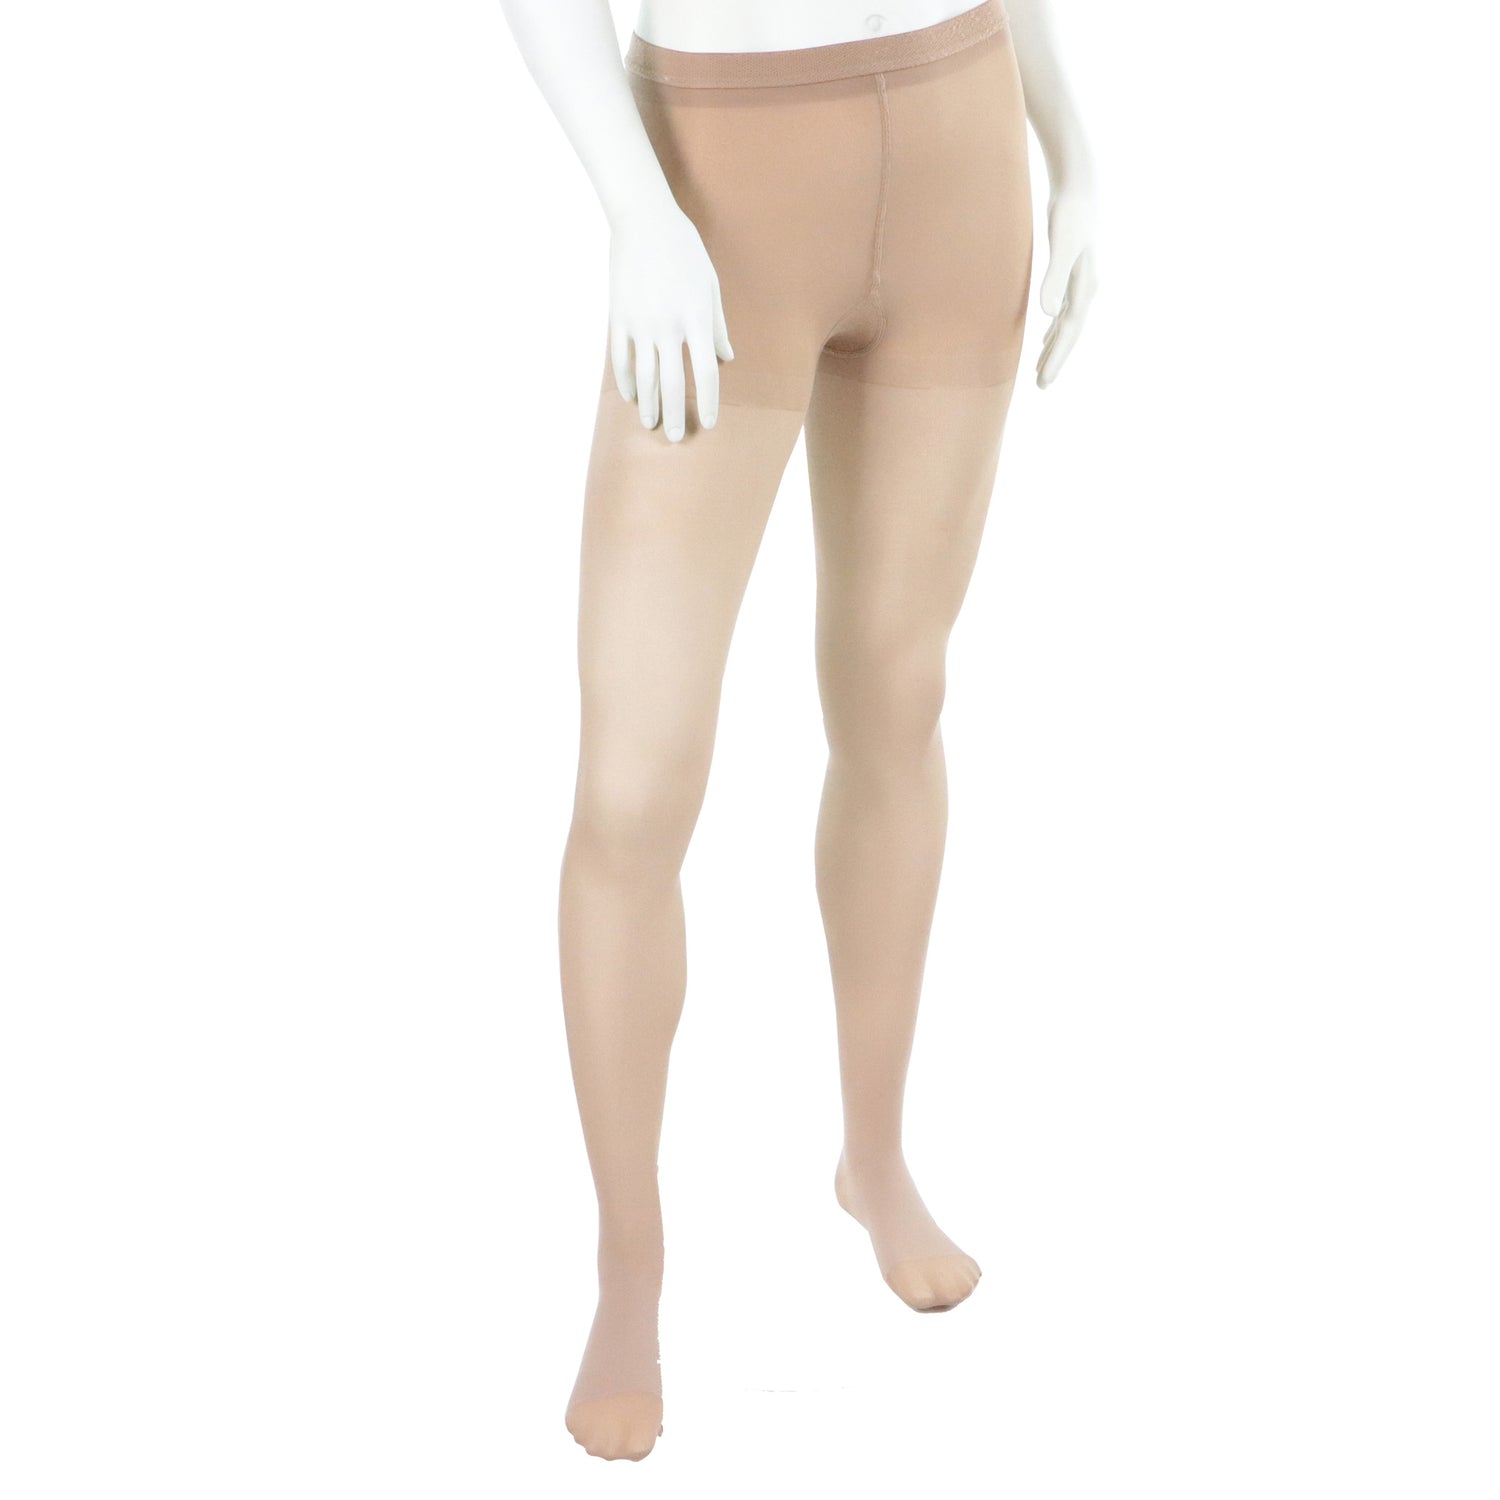 Medical Compression Leggings for Women 20-30 mmhg Compression